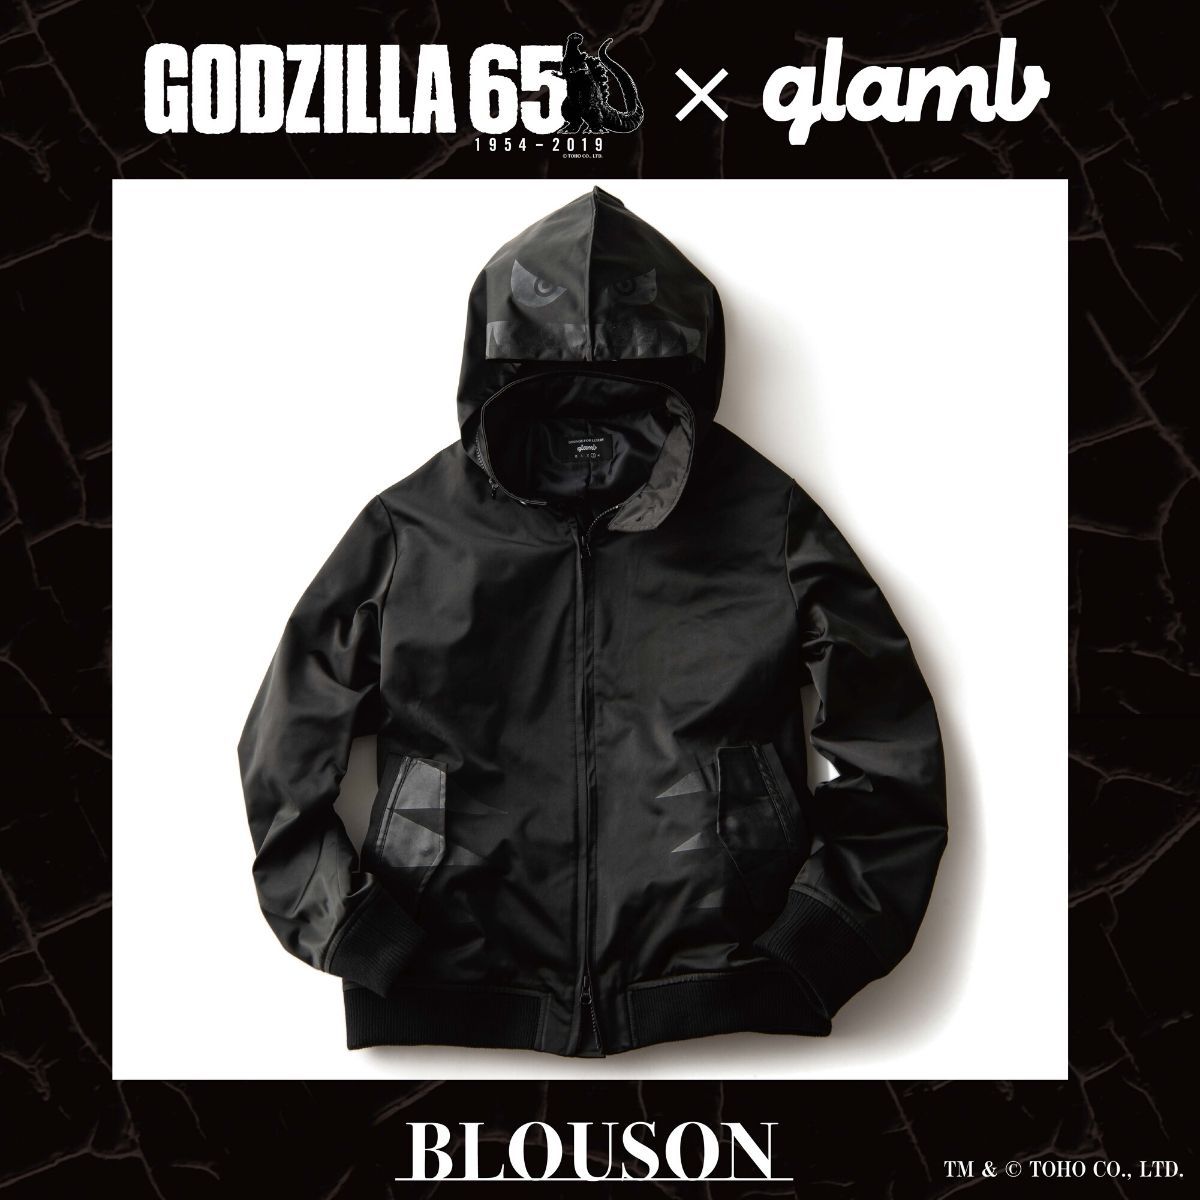 Windbreaker—Godzilla/glamb Collaboration